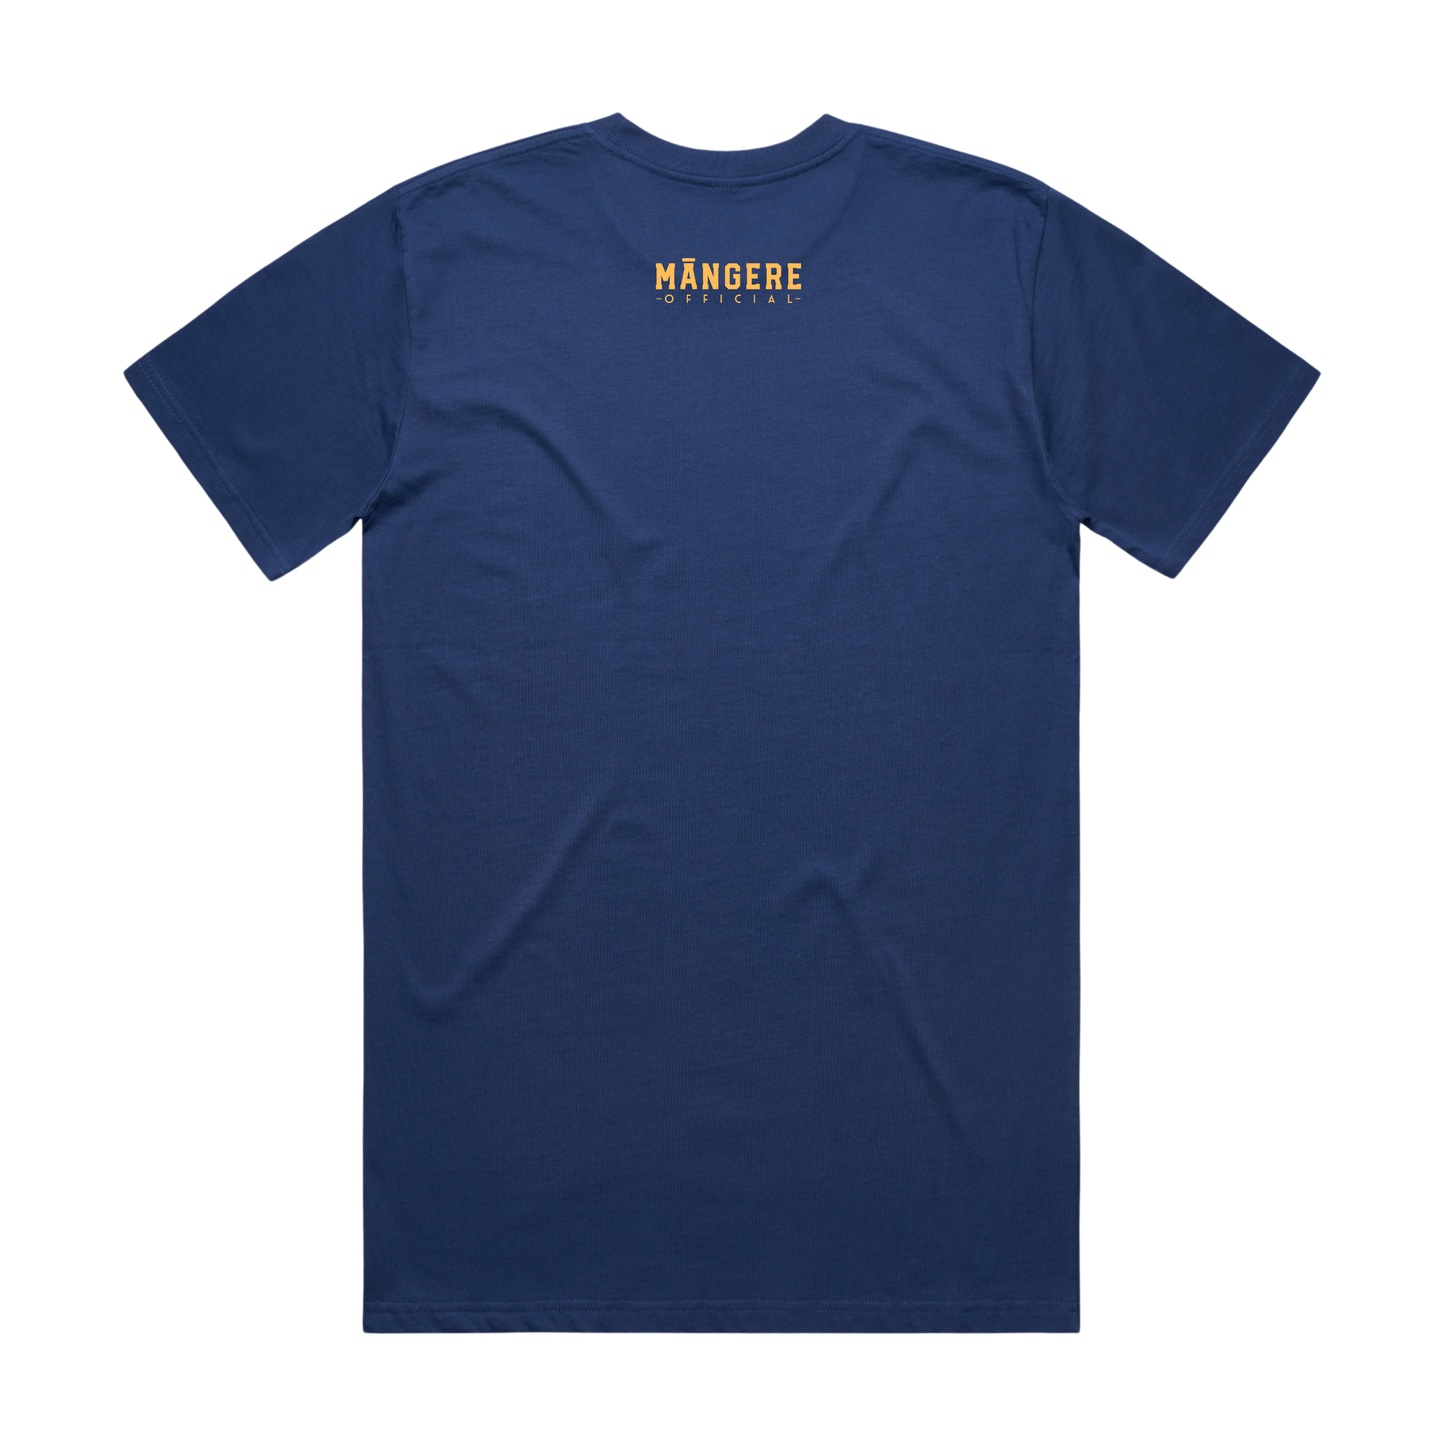 "M" āngere Official Pocket Logo T-Shirt